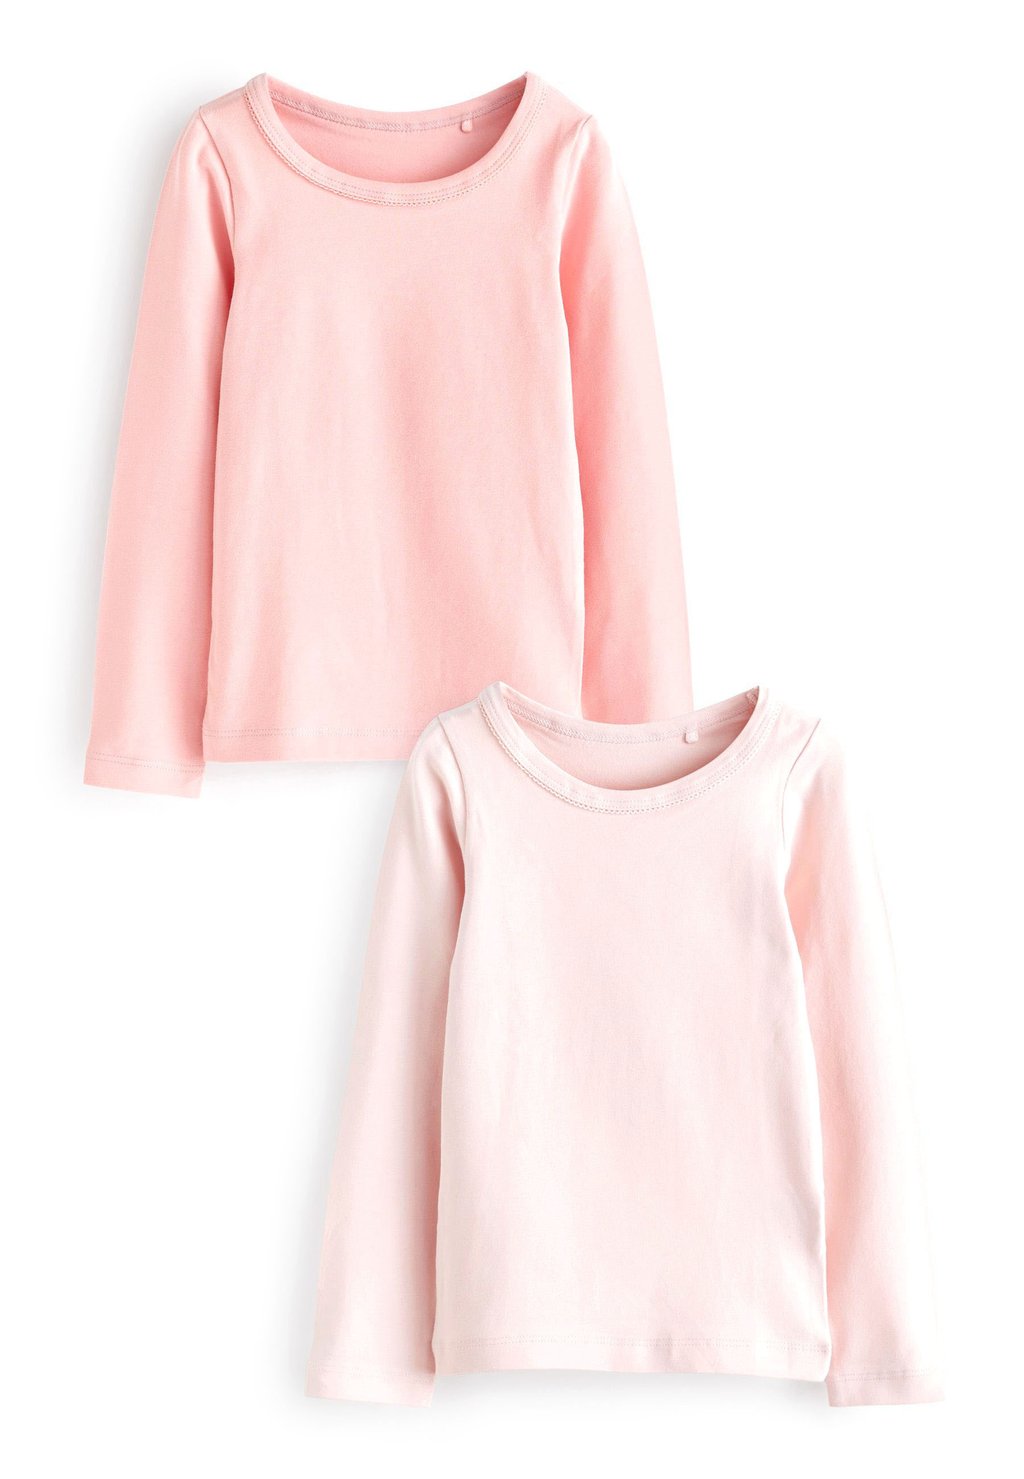 Базовая футболка 2Pac Next, цвет pink long sleeved футболка uniqlo u crew neck long sleeved розовый